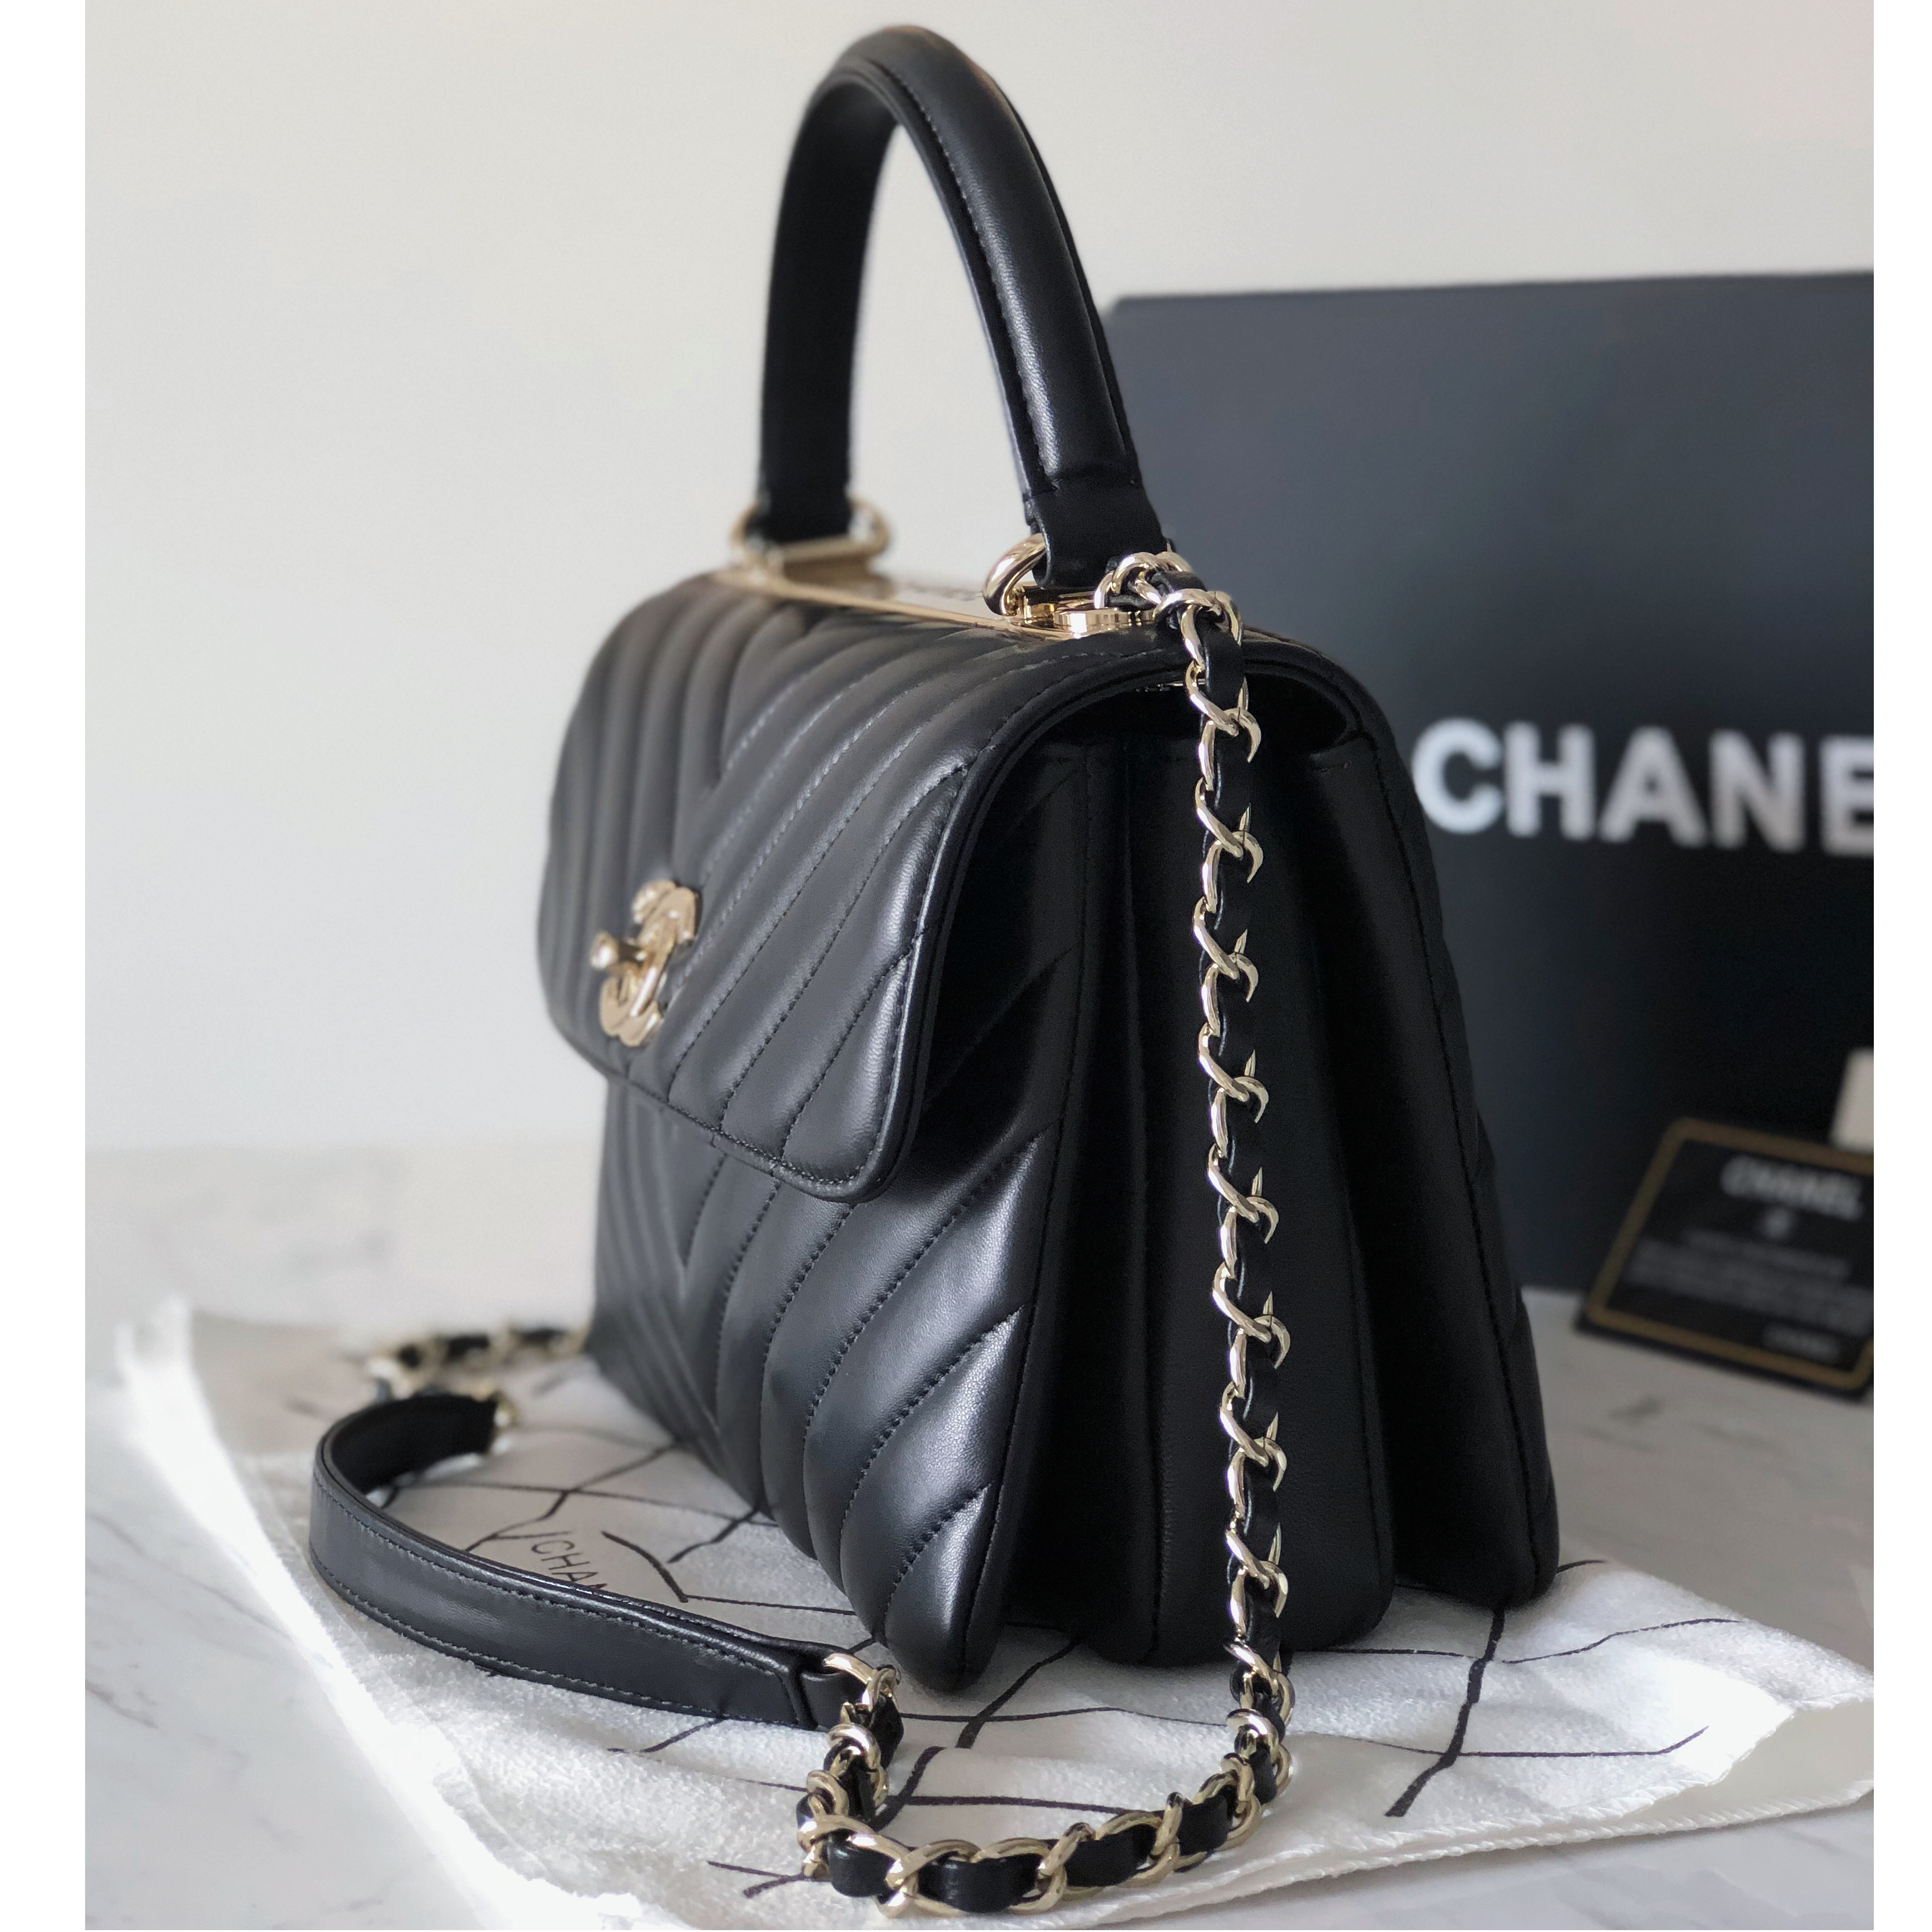 Copy Of Chanel Classic Flap Bag Small Chanel Boy Bag Black Designer Women Cheap Chanel Coco Crossbody Bag Purse Sale Replica Handbags 1552574721640 5 